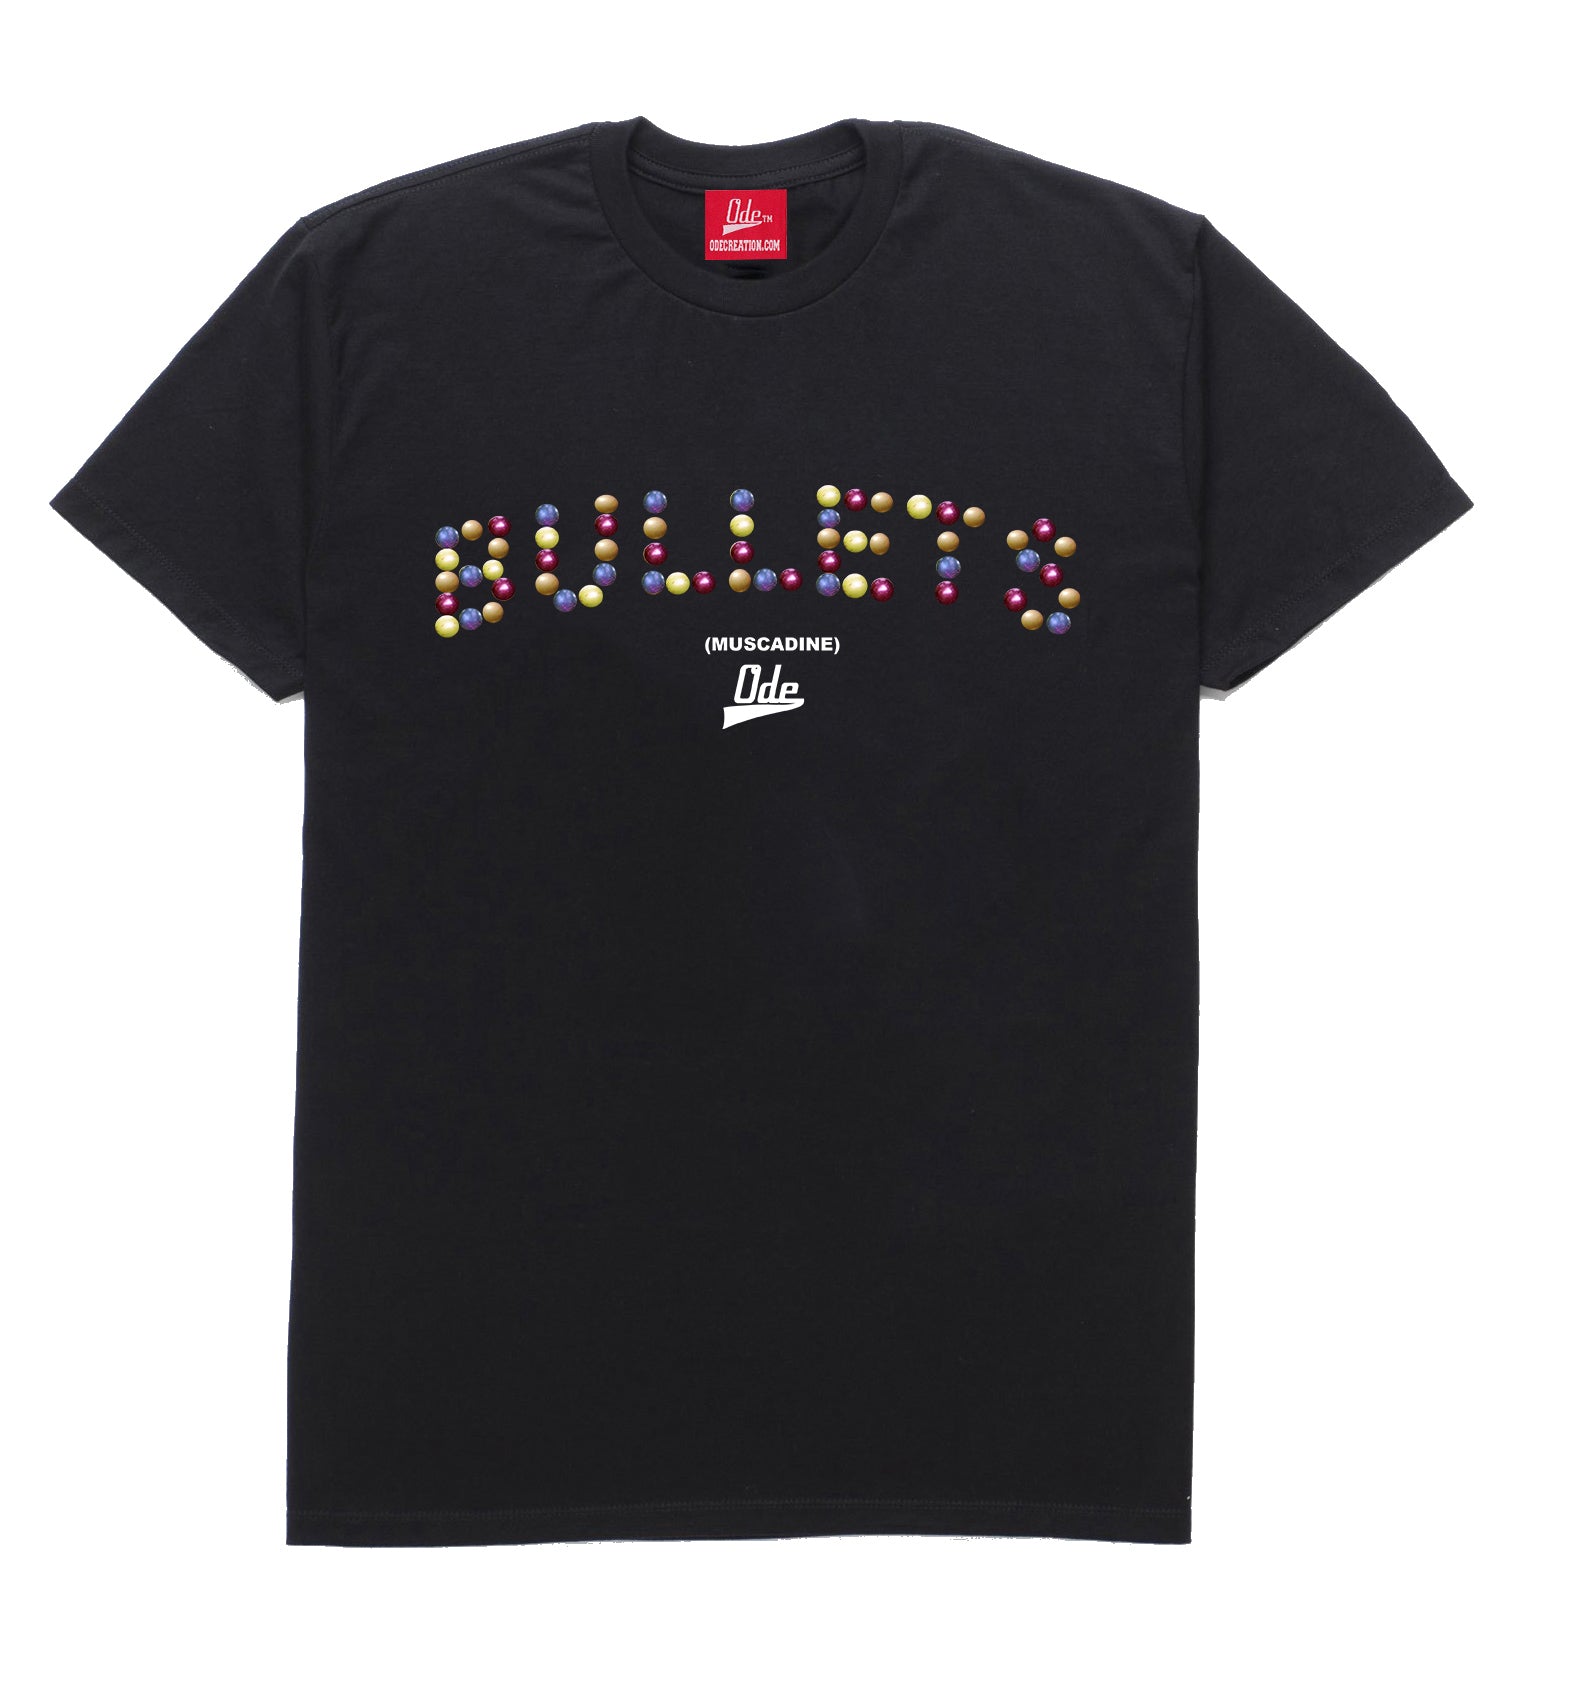 The Ode Bullet( Muscadine) T-shirt- Black